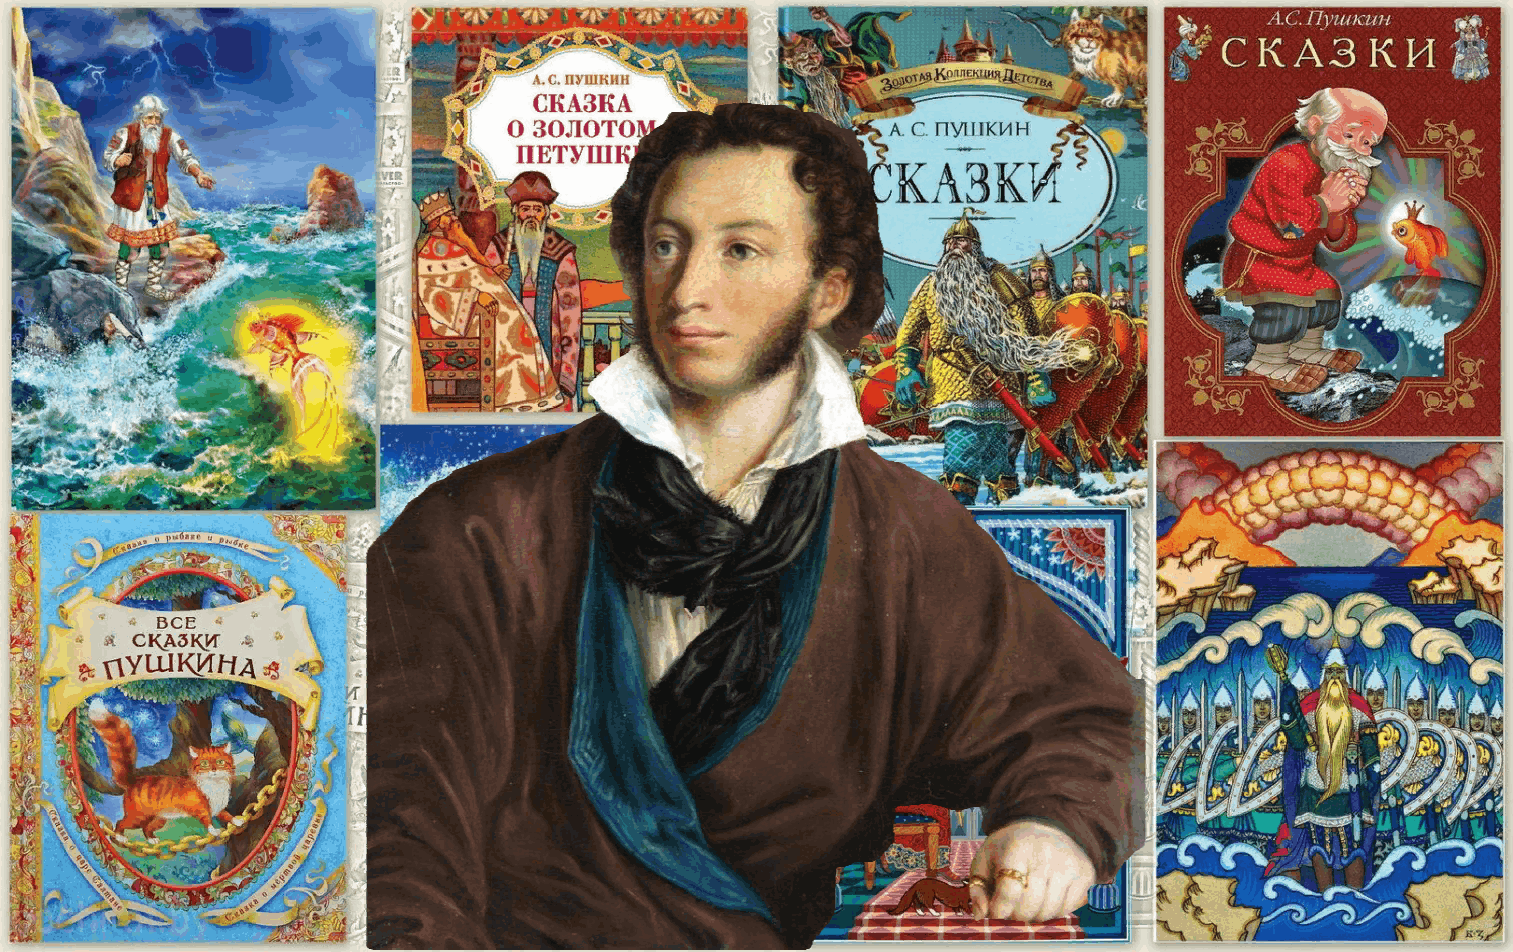 Эпоха произведений пушкина